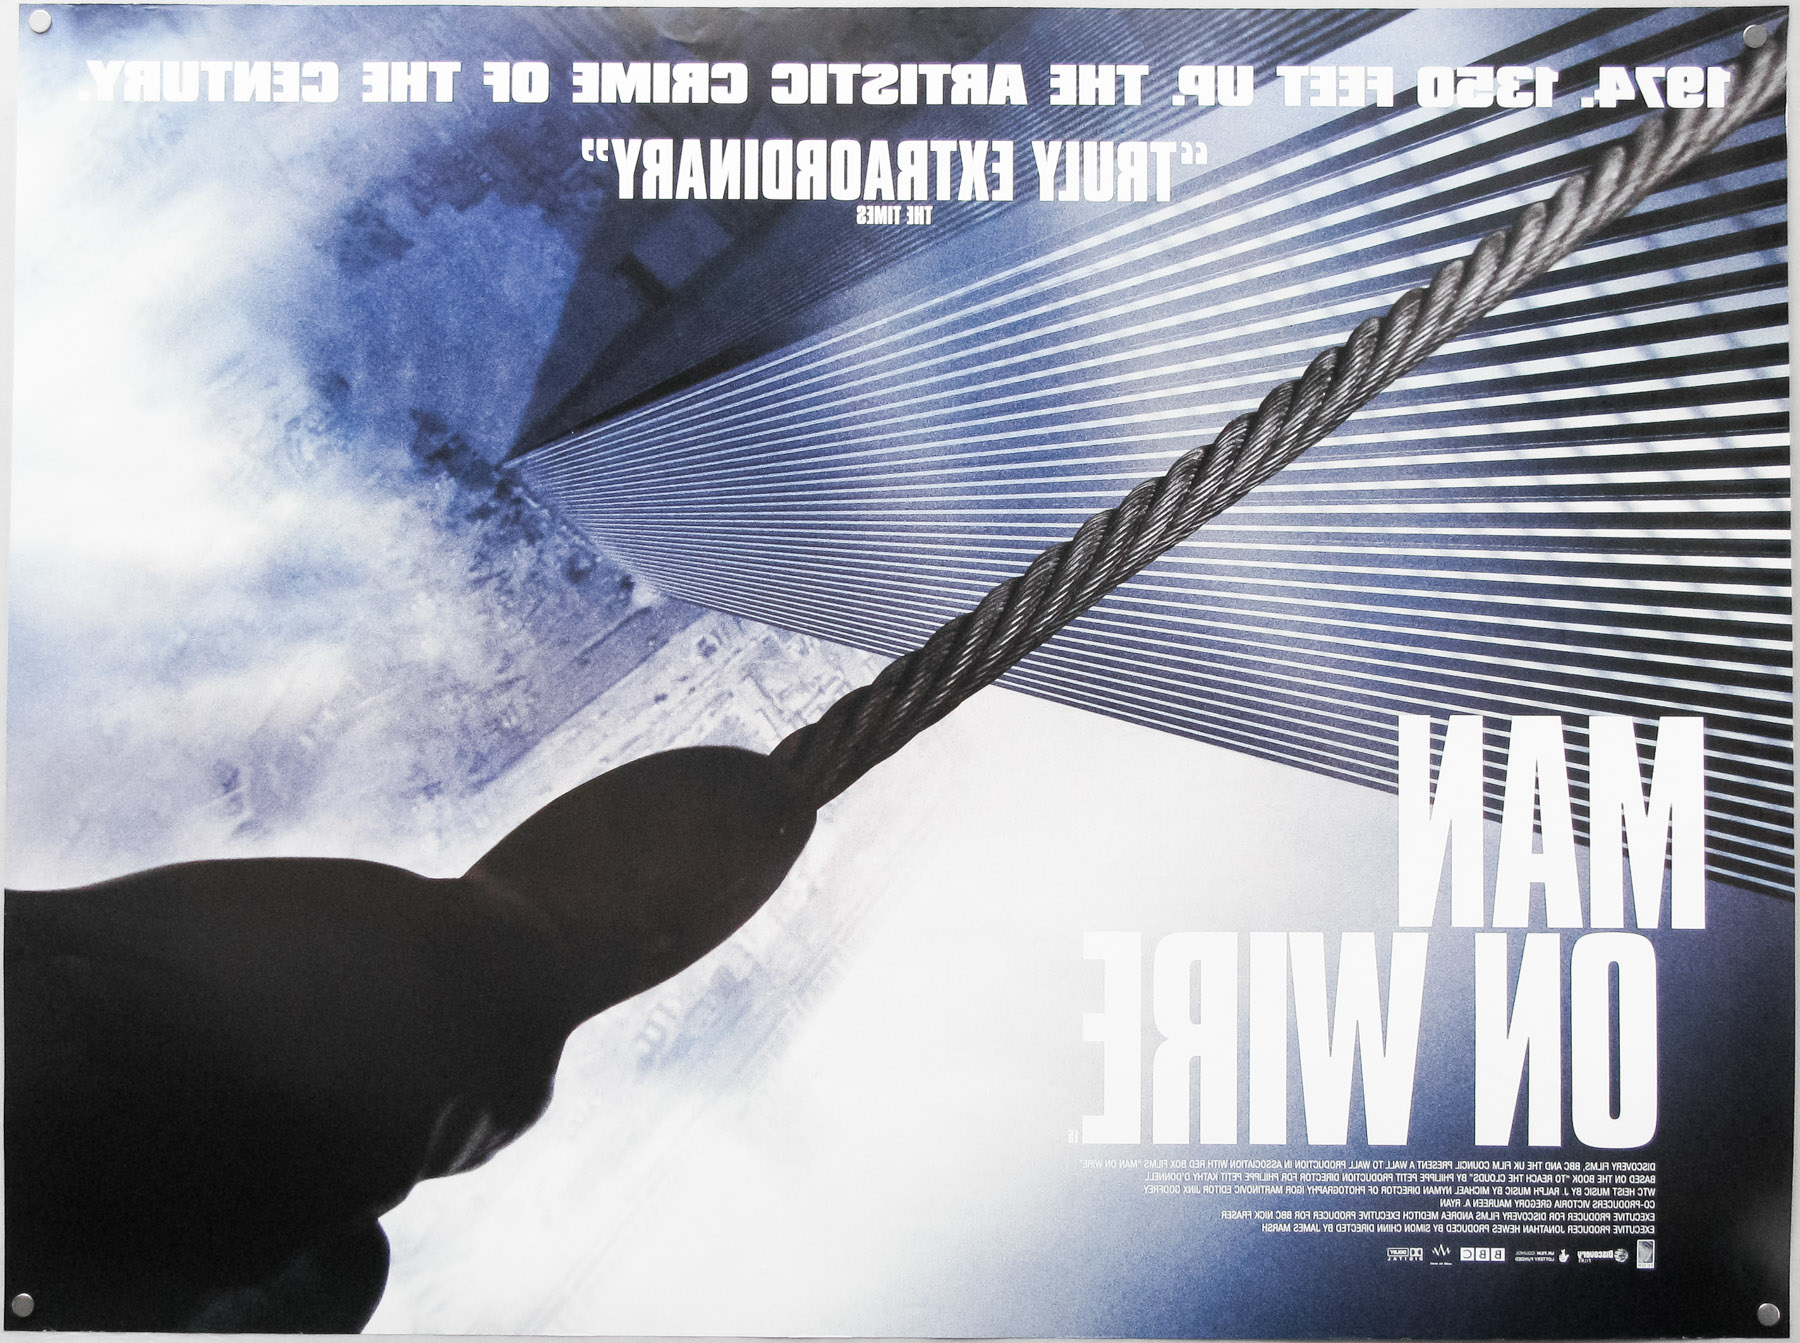 Man on Wire, Documentary films